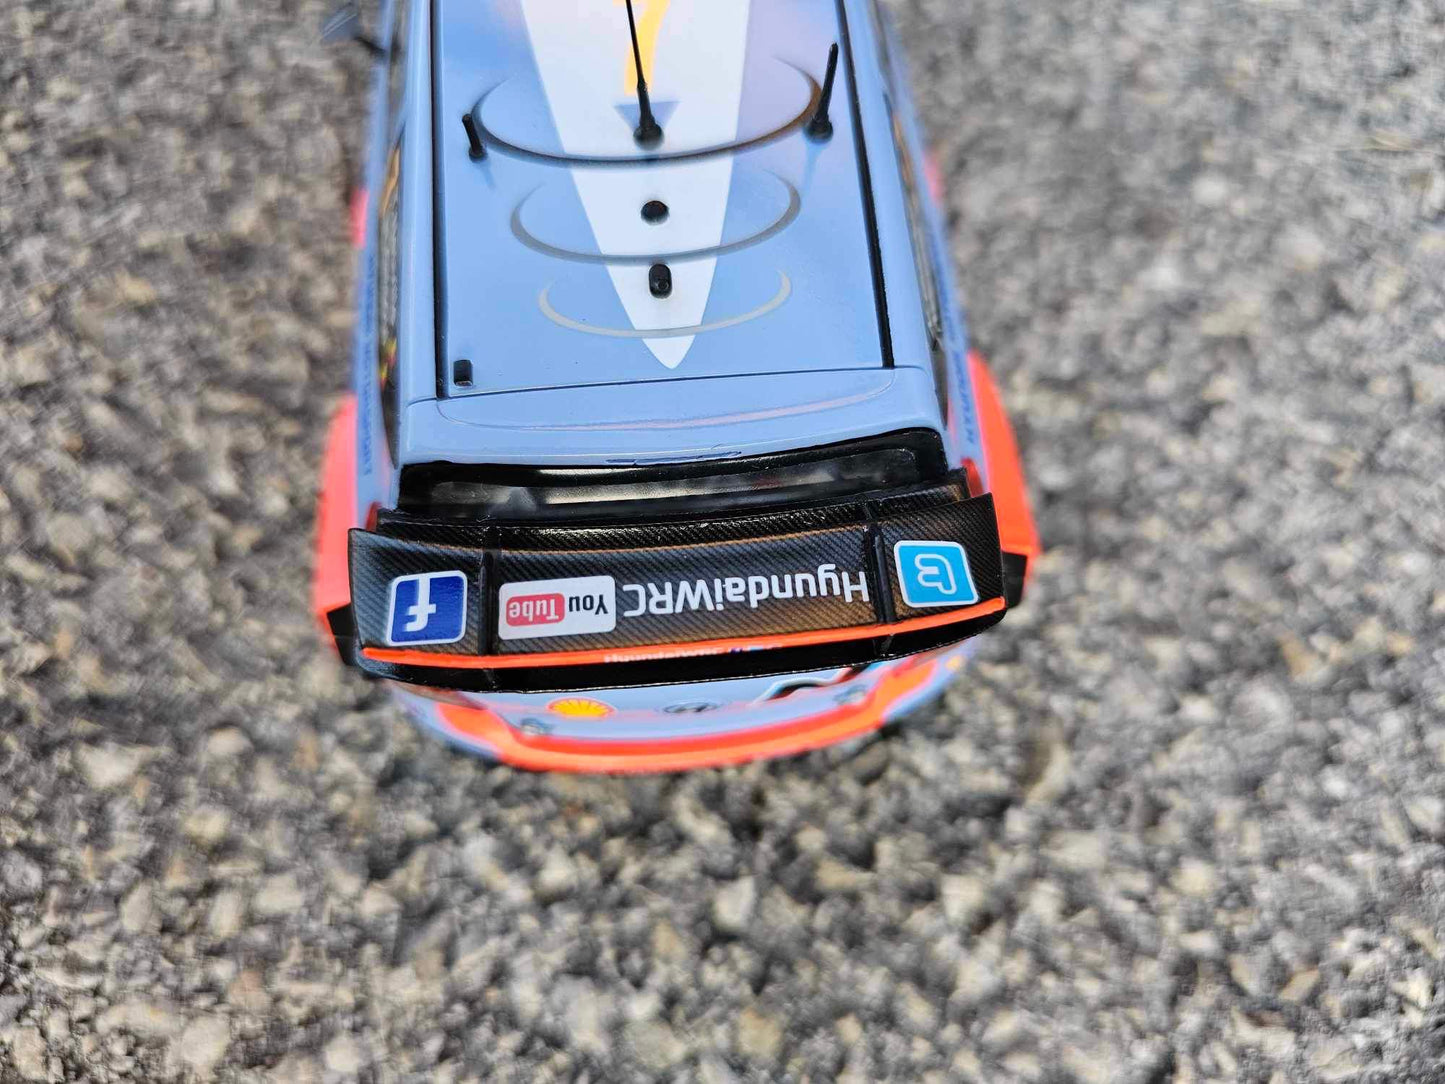 HYUNDAI i20 WRC - RALLY GERMANY 2014